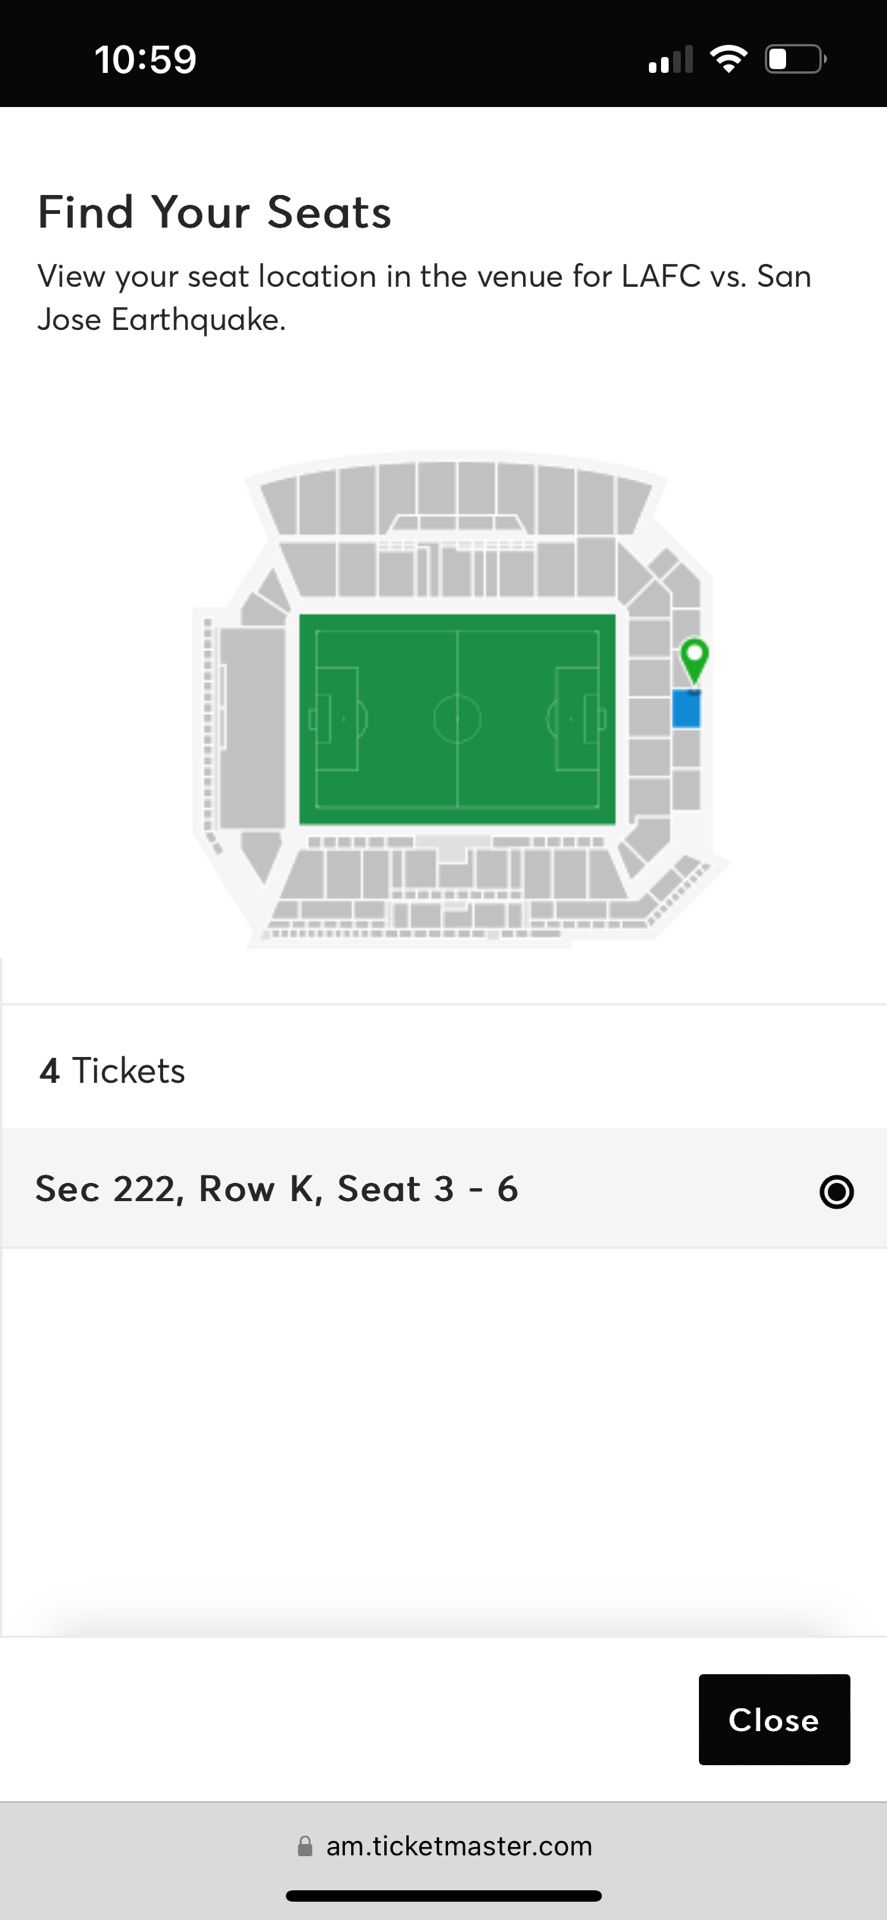 4 LAFC Tickets $45/ Ticket